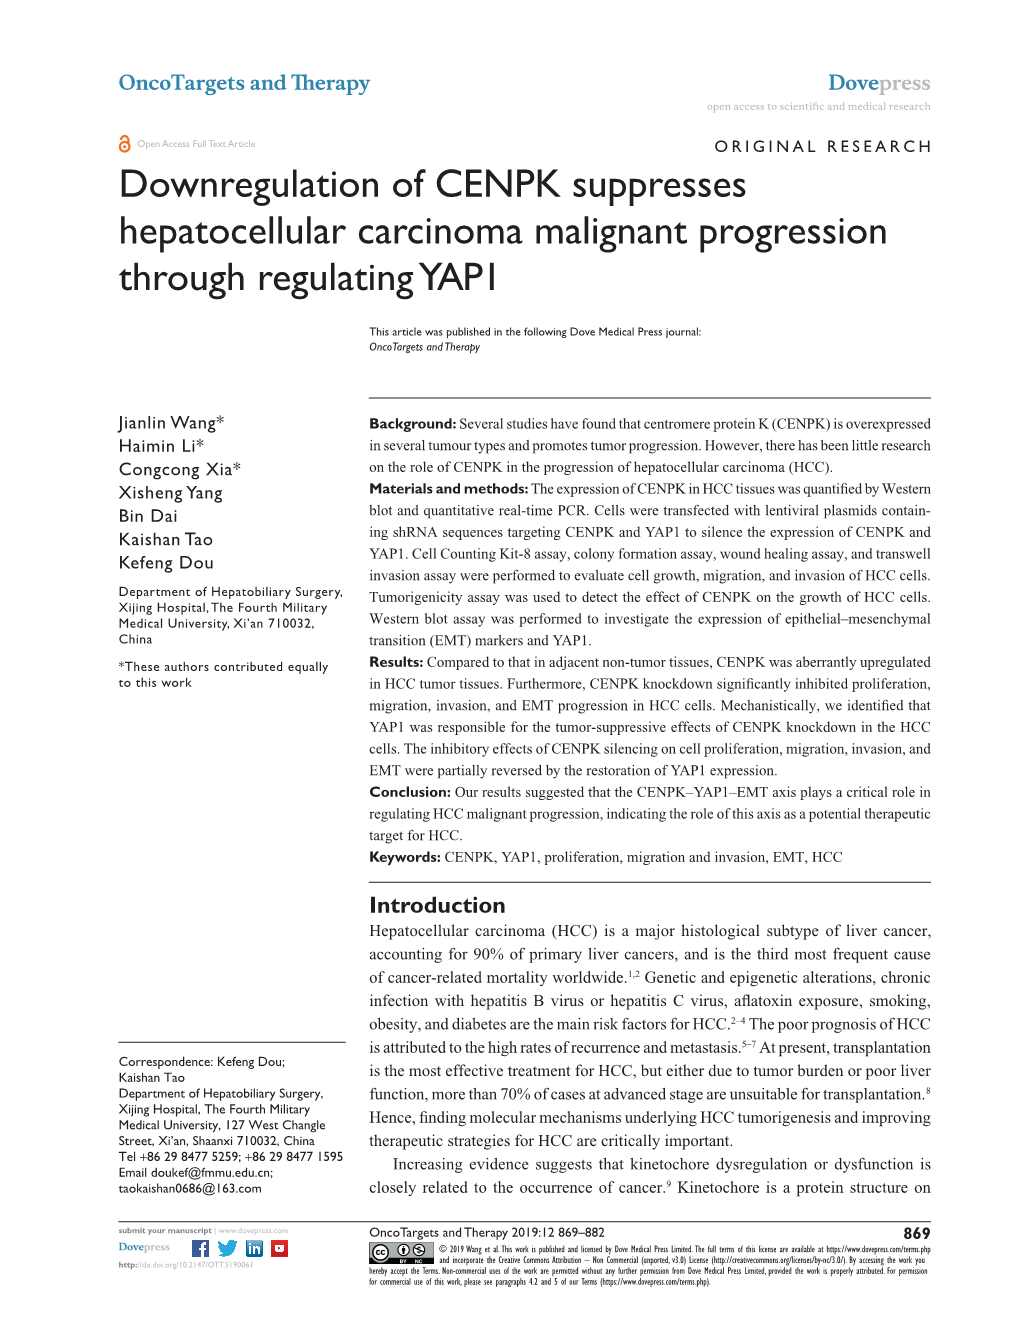 Downregulation of CENPK Suppresses Hepatocellular Carcinoma Malignant Progression Through Regulating YAP1